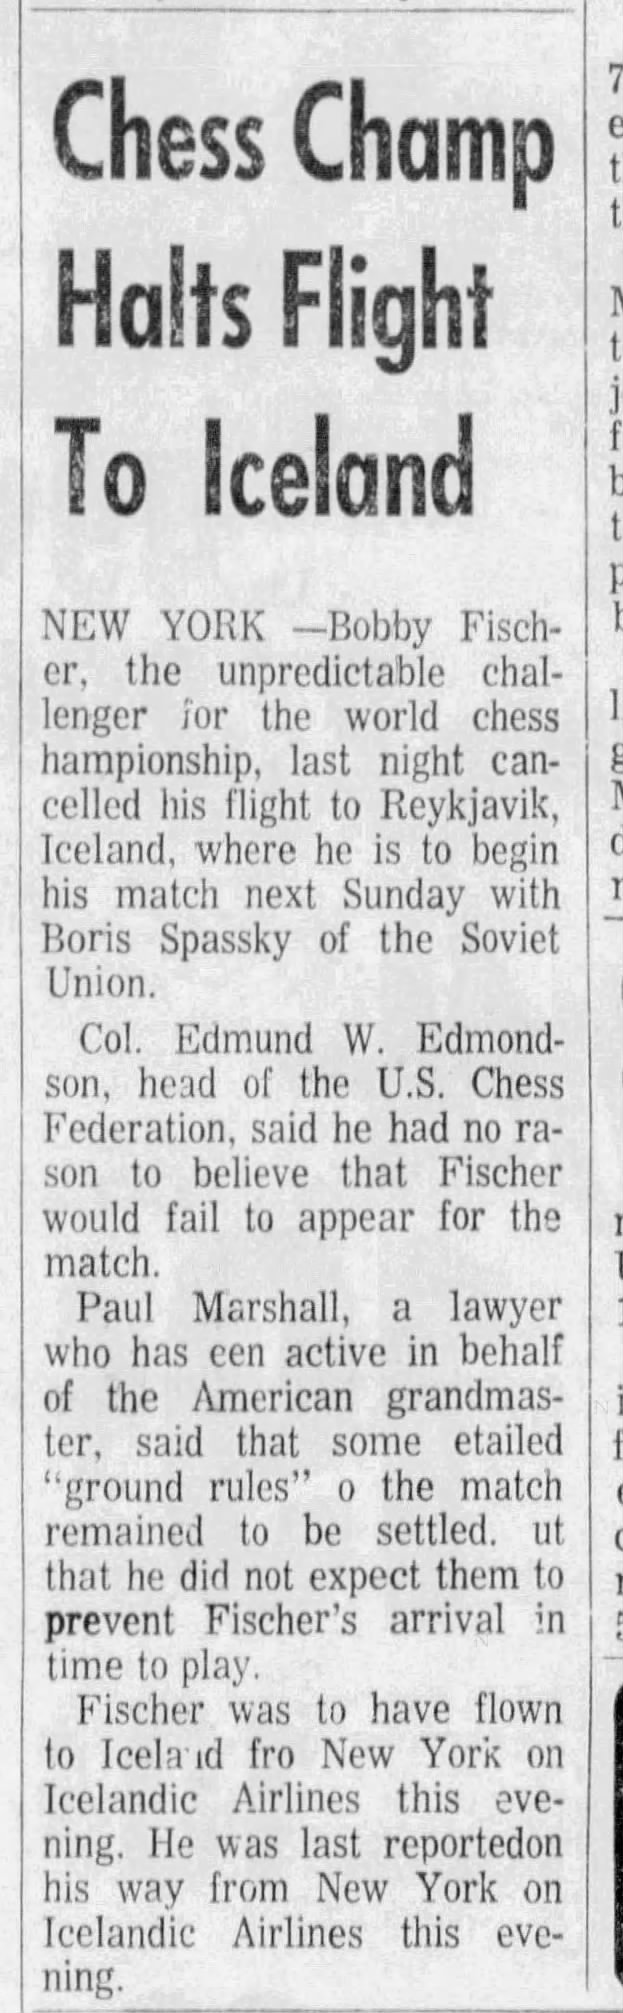 Chess Champ Halts Flight To Iceland